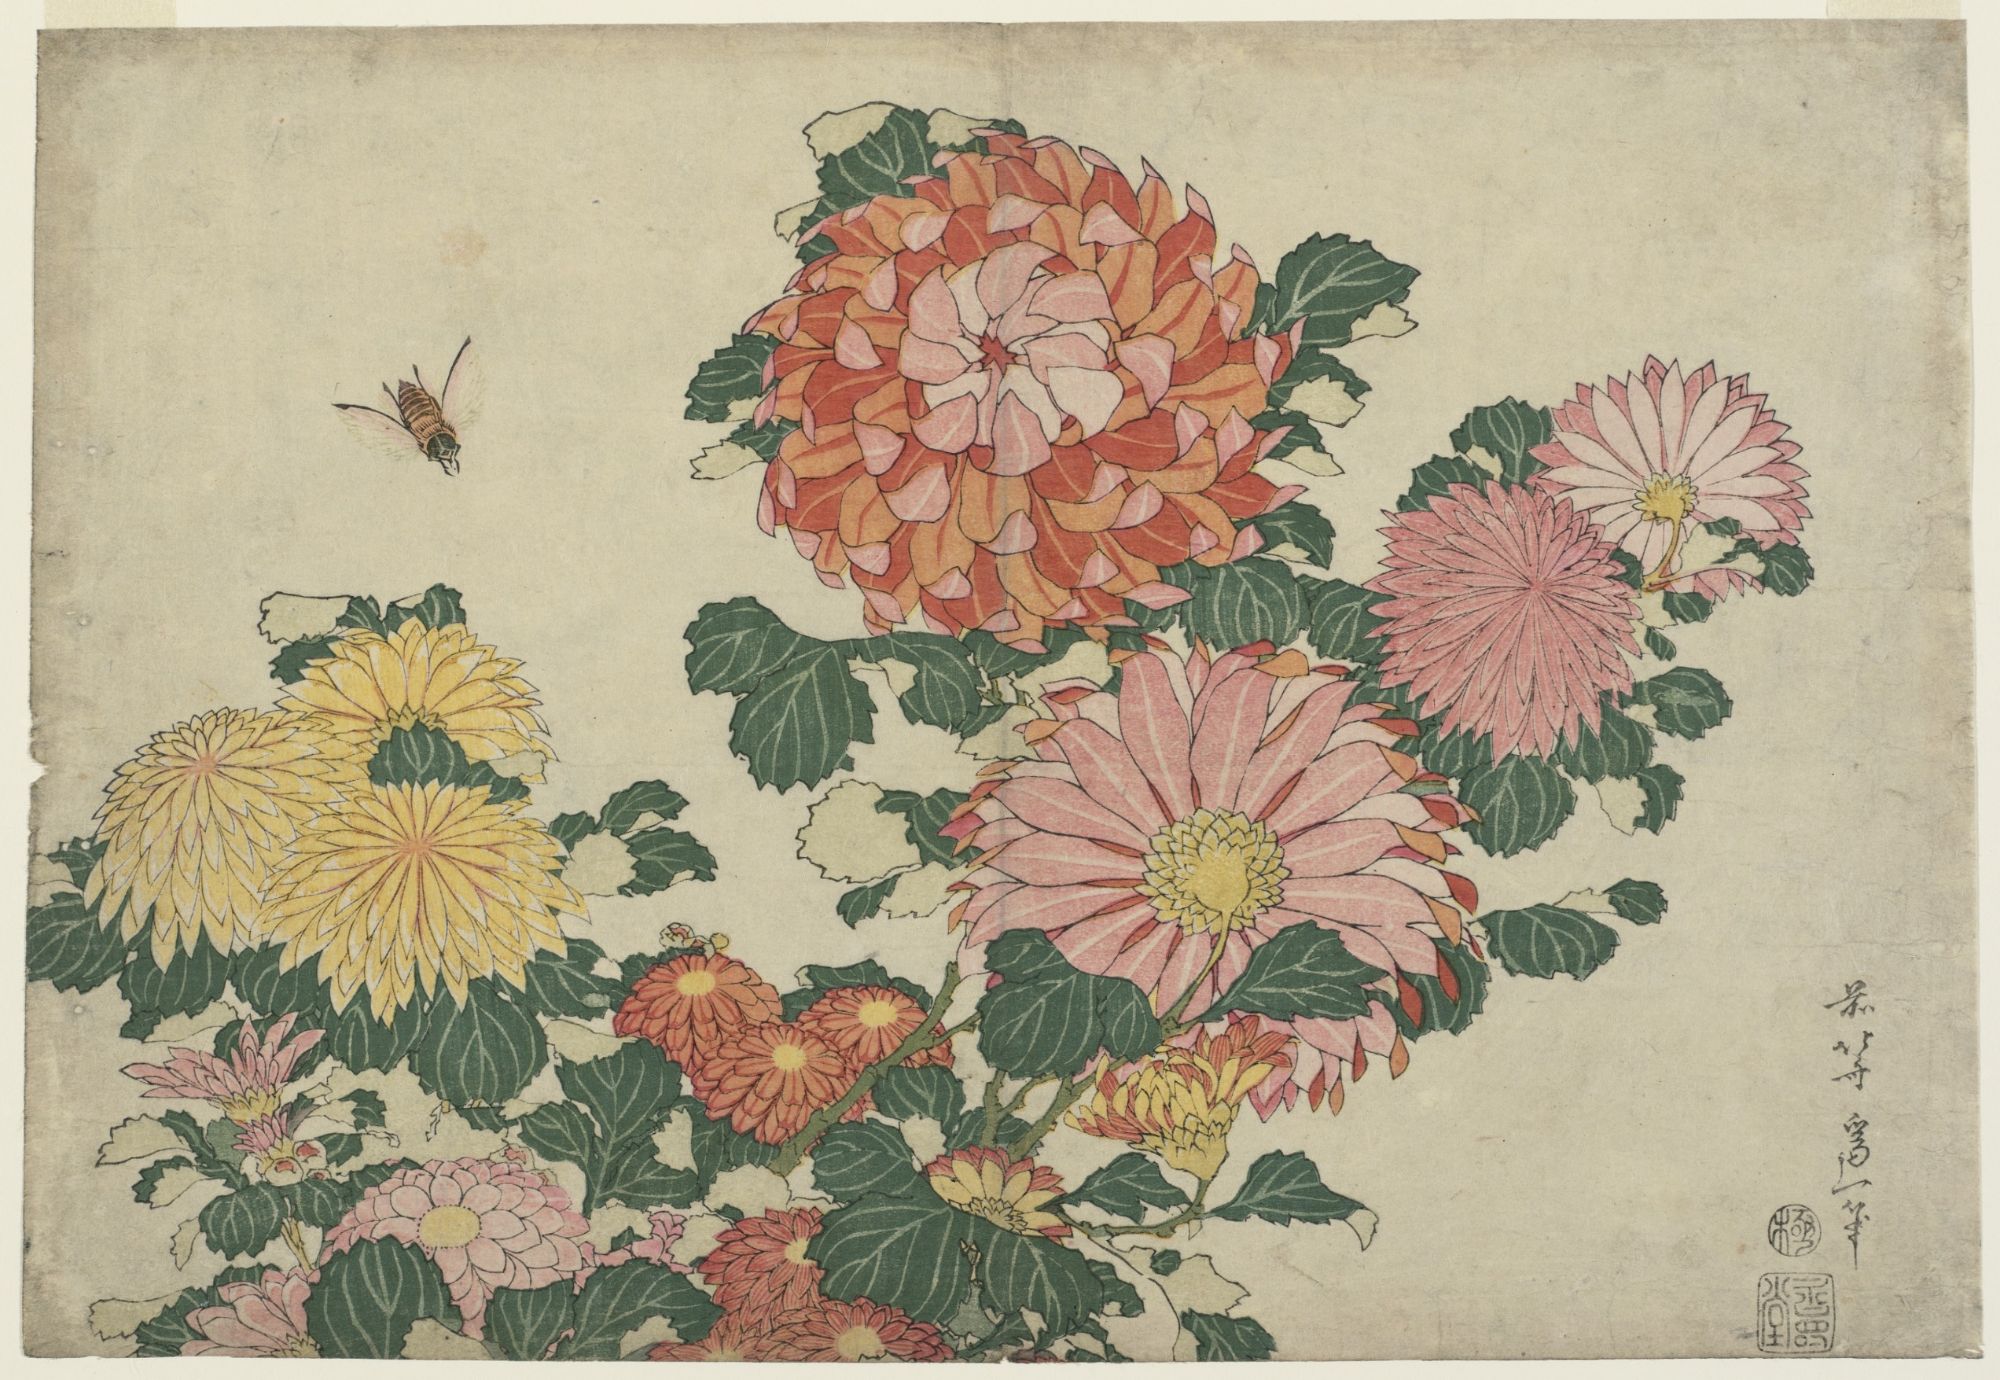 Katsushika Hokusai: Chrysanthemums and Horsefly, from an untitled 